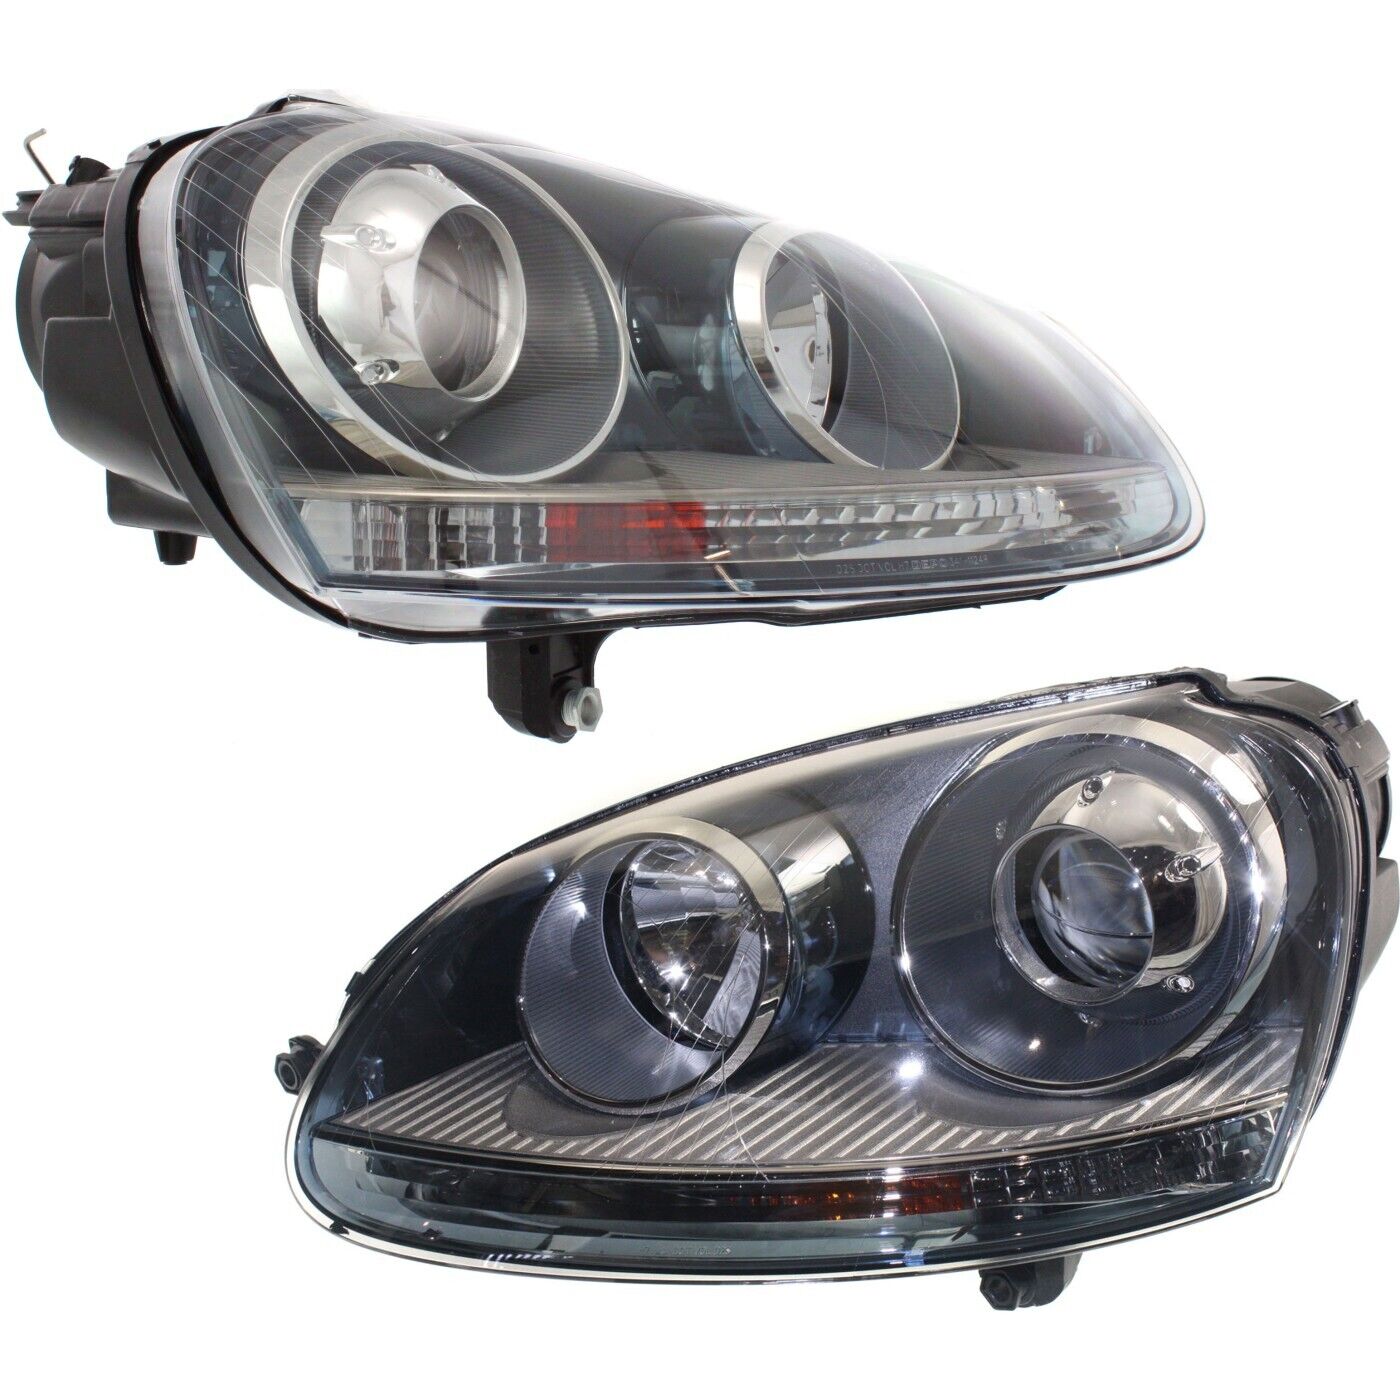 HID Headlight Set For 2005-2010 Volkswagen Jetta Left & Right Pair